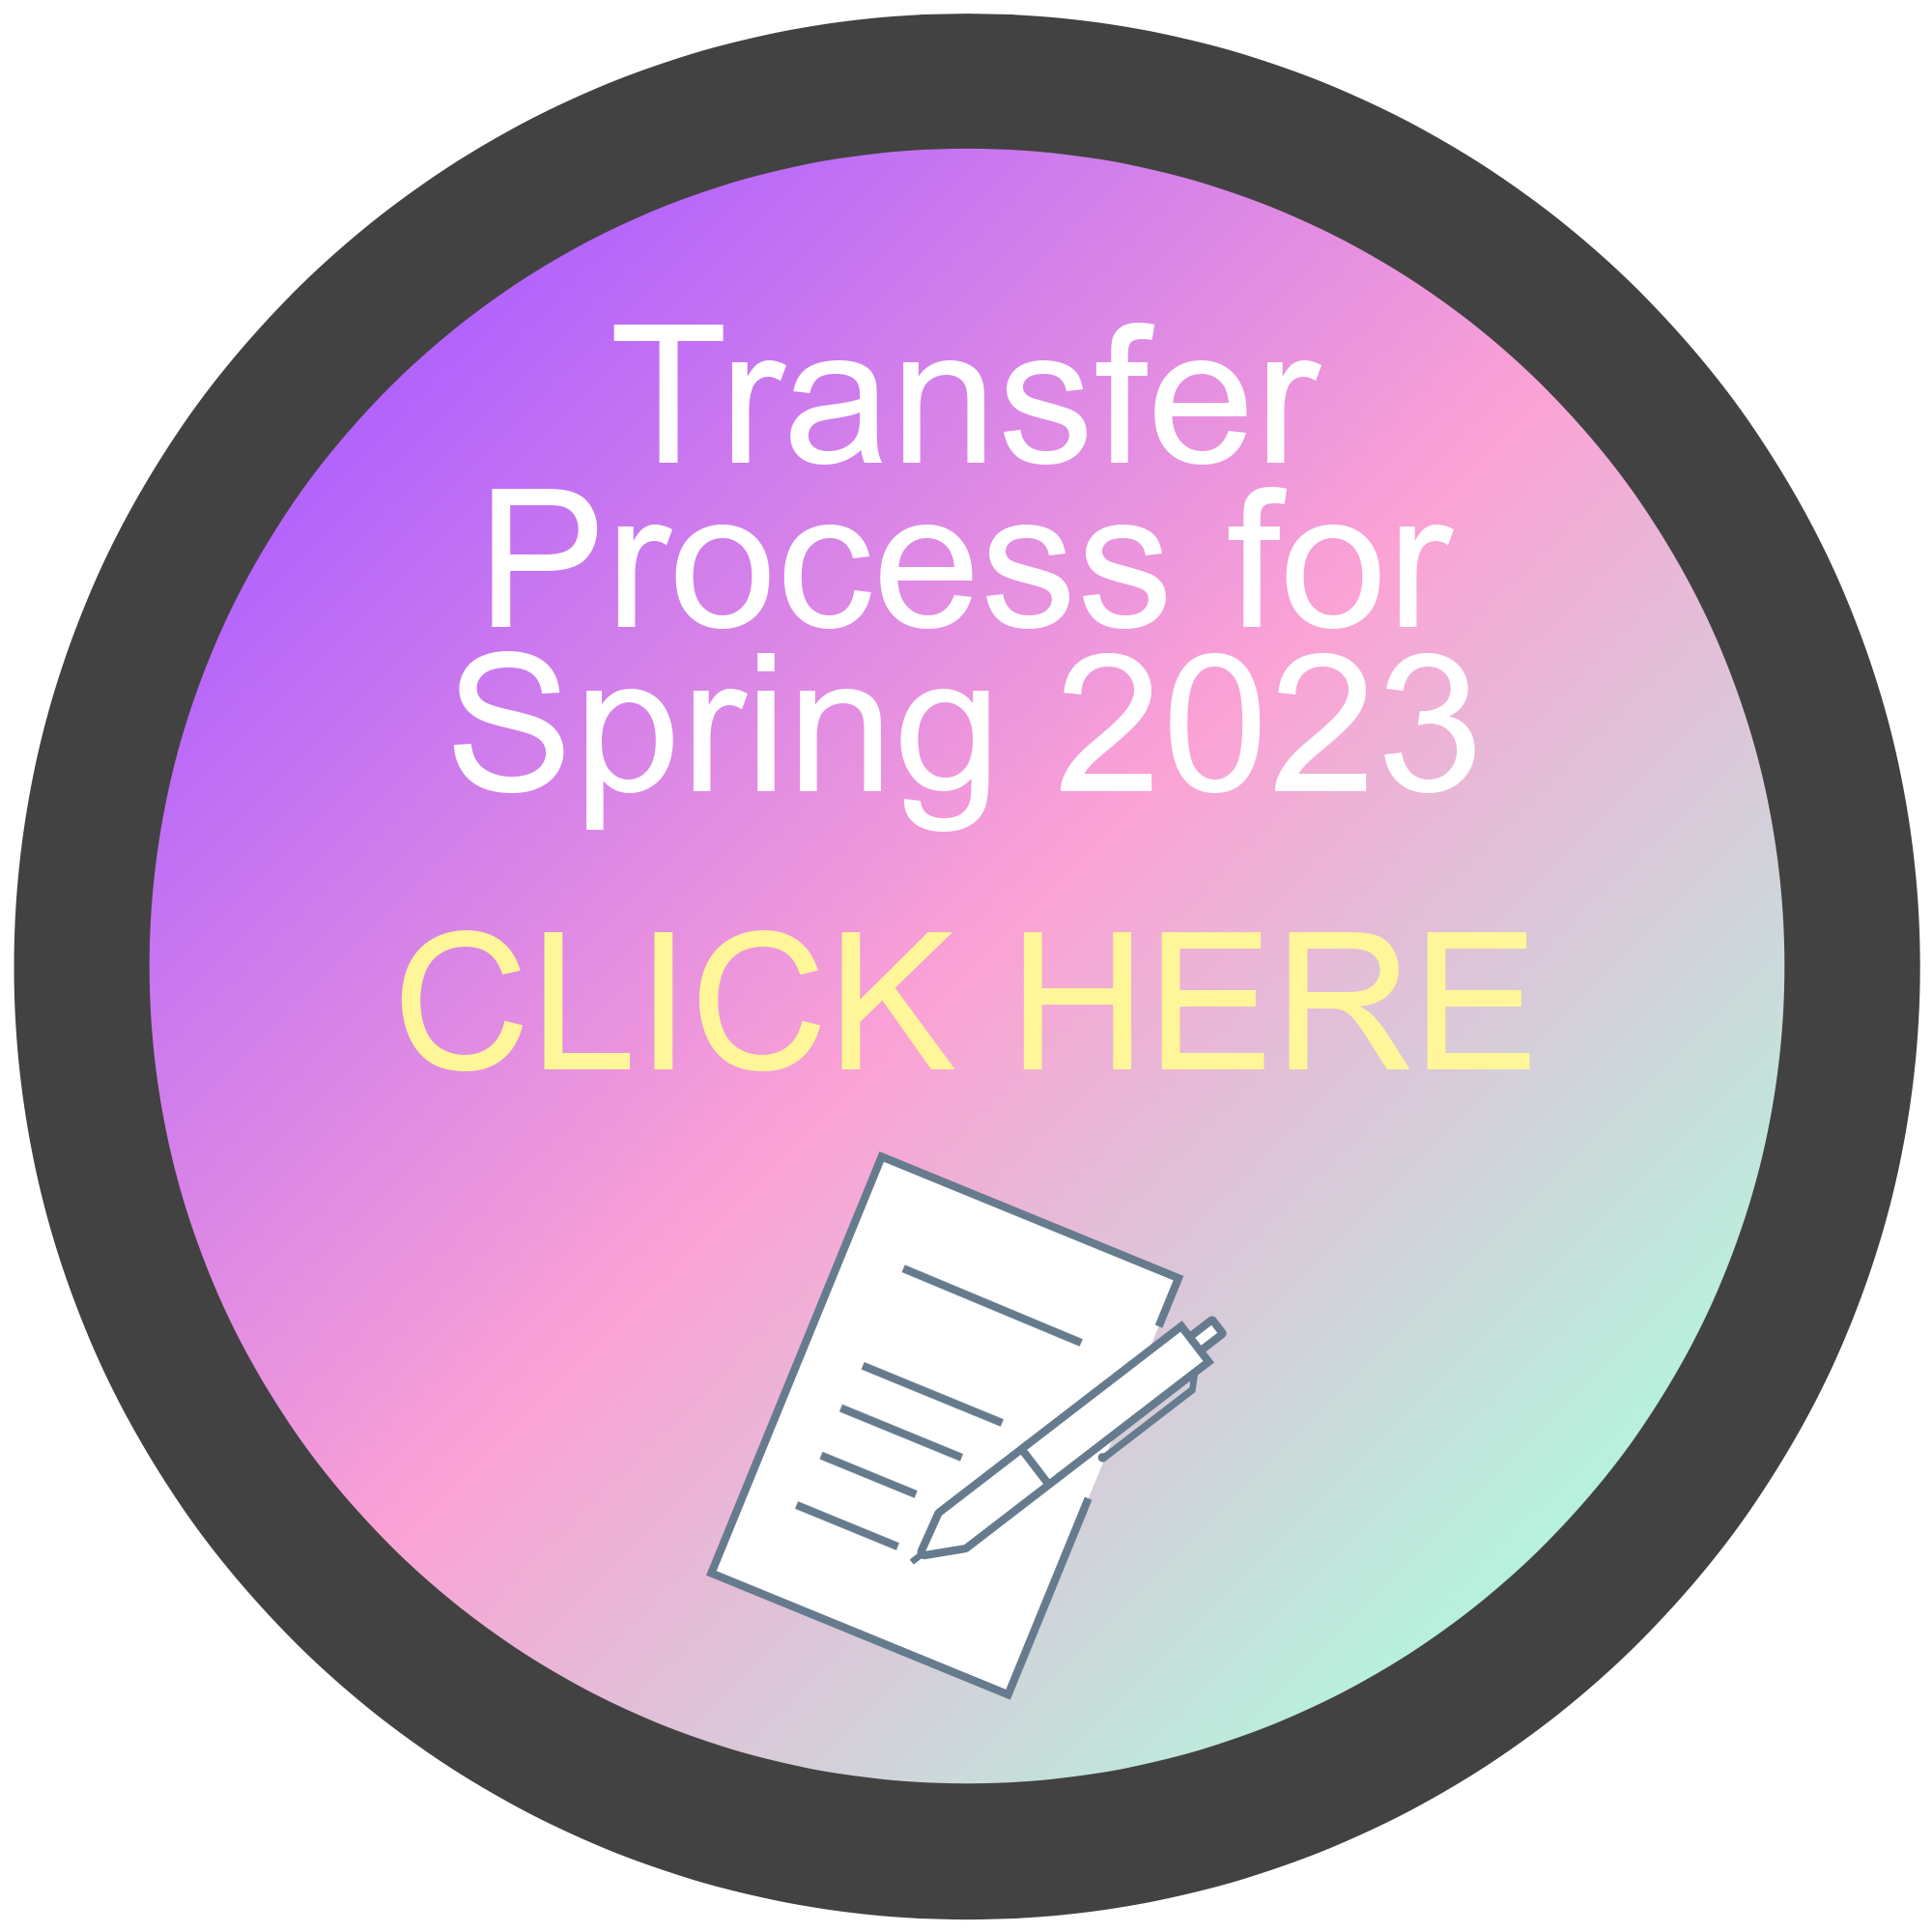 Transfer process button